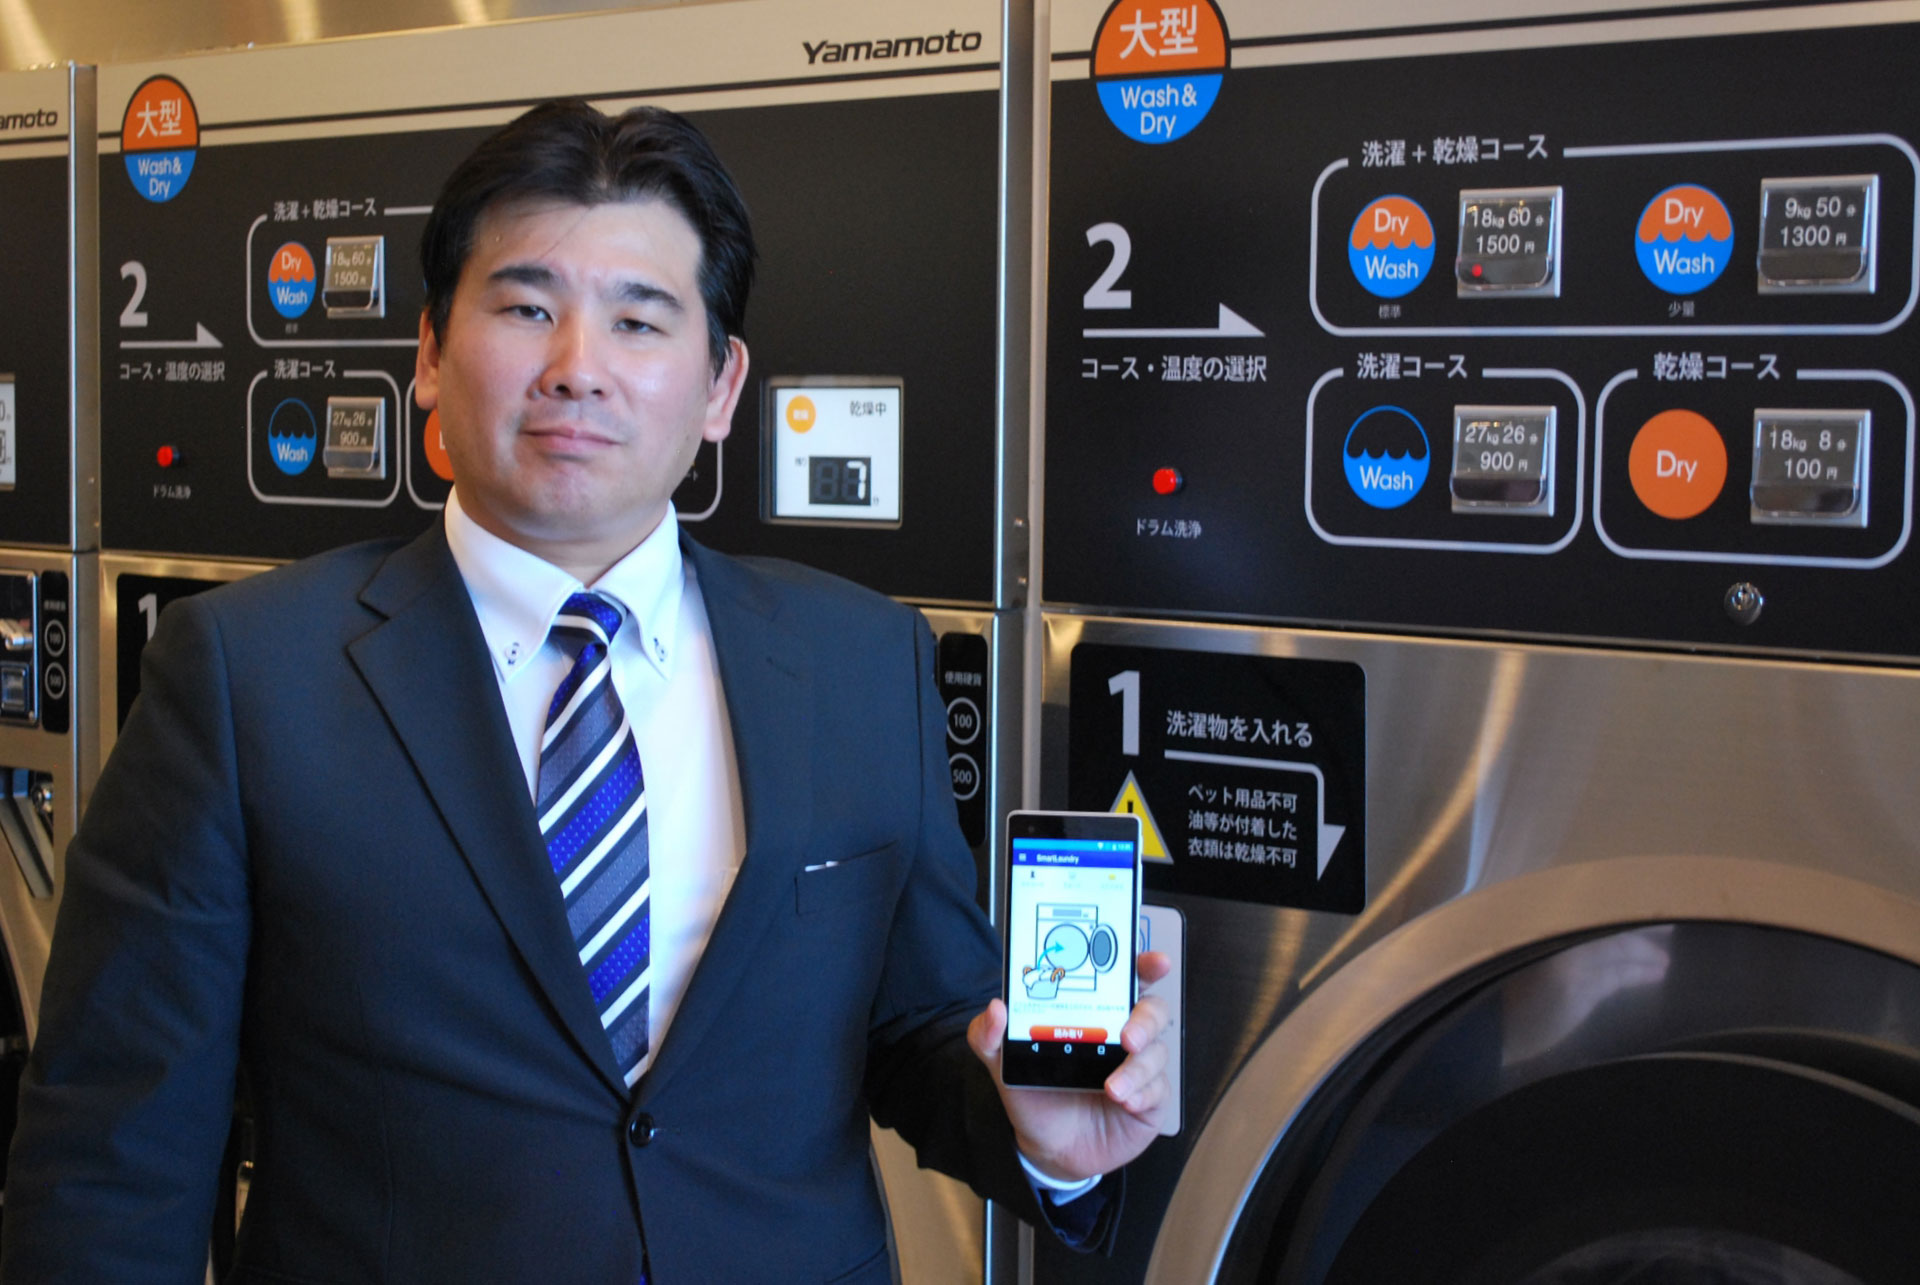 「Smart Laundry」システム搭載コインランドリーを紹介する株式会社wash-plusの高梨健太郎社長